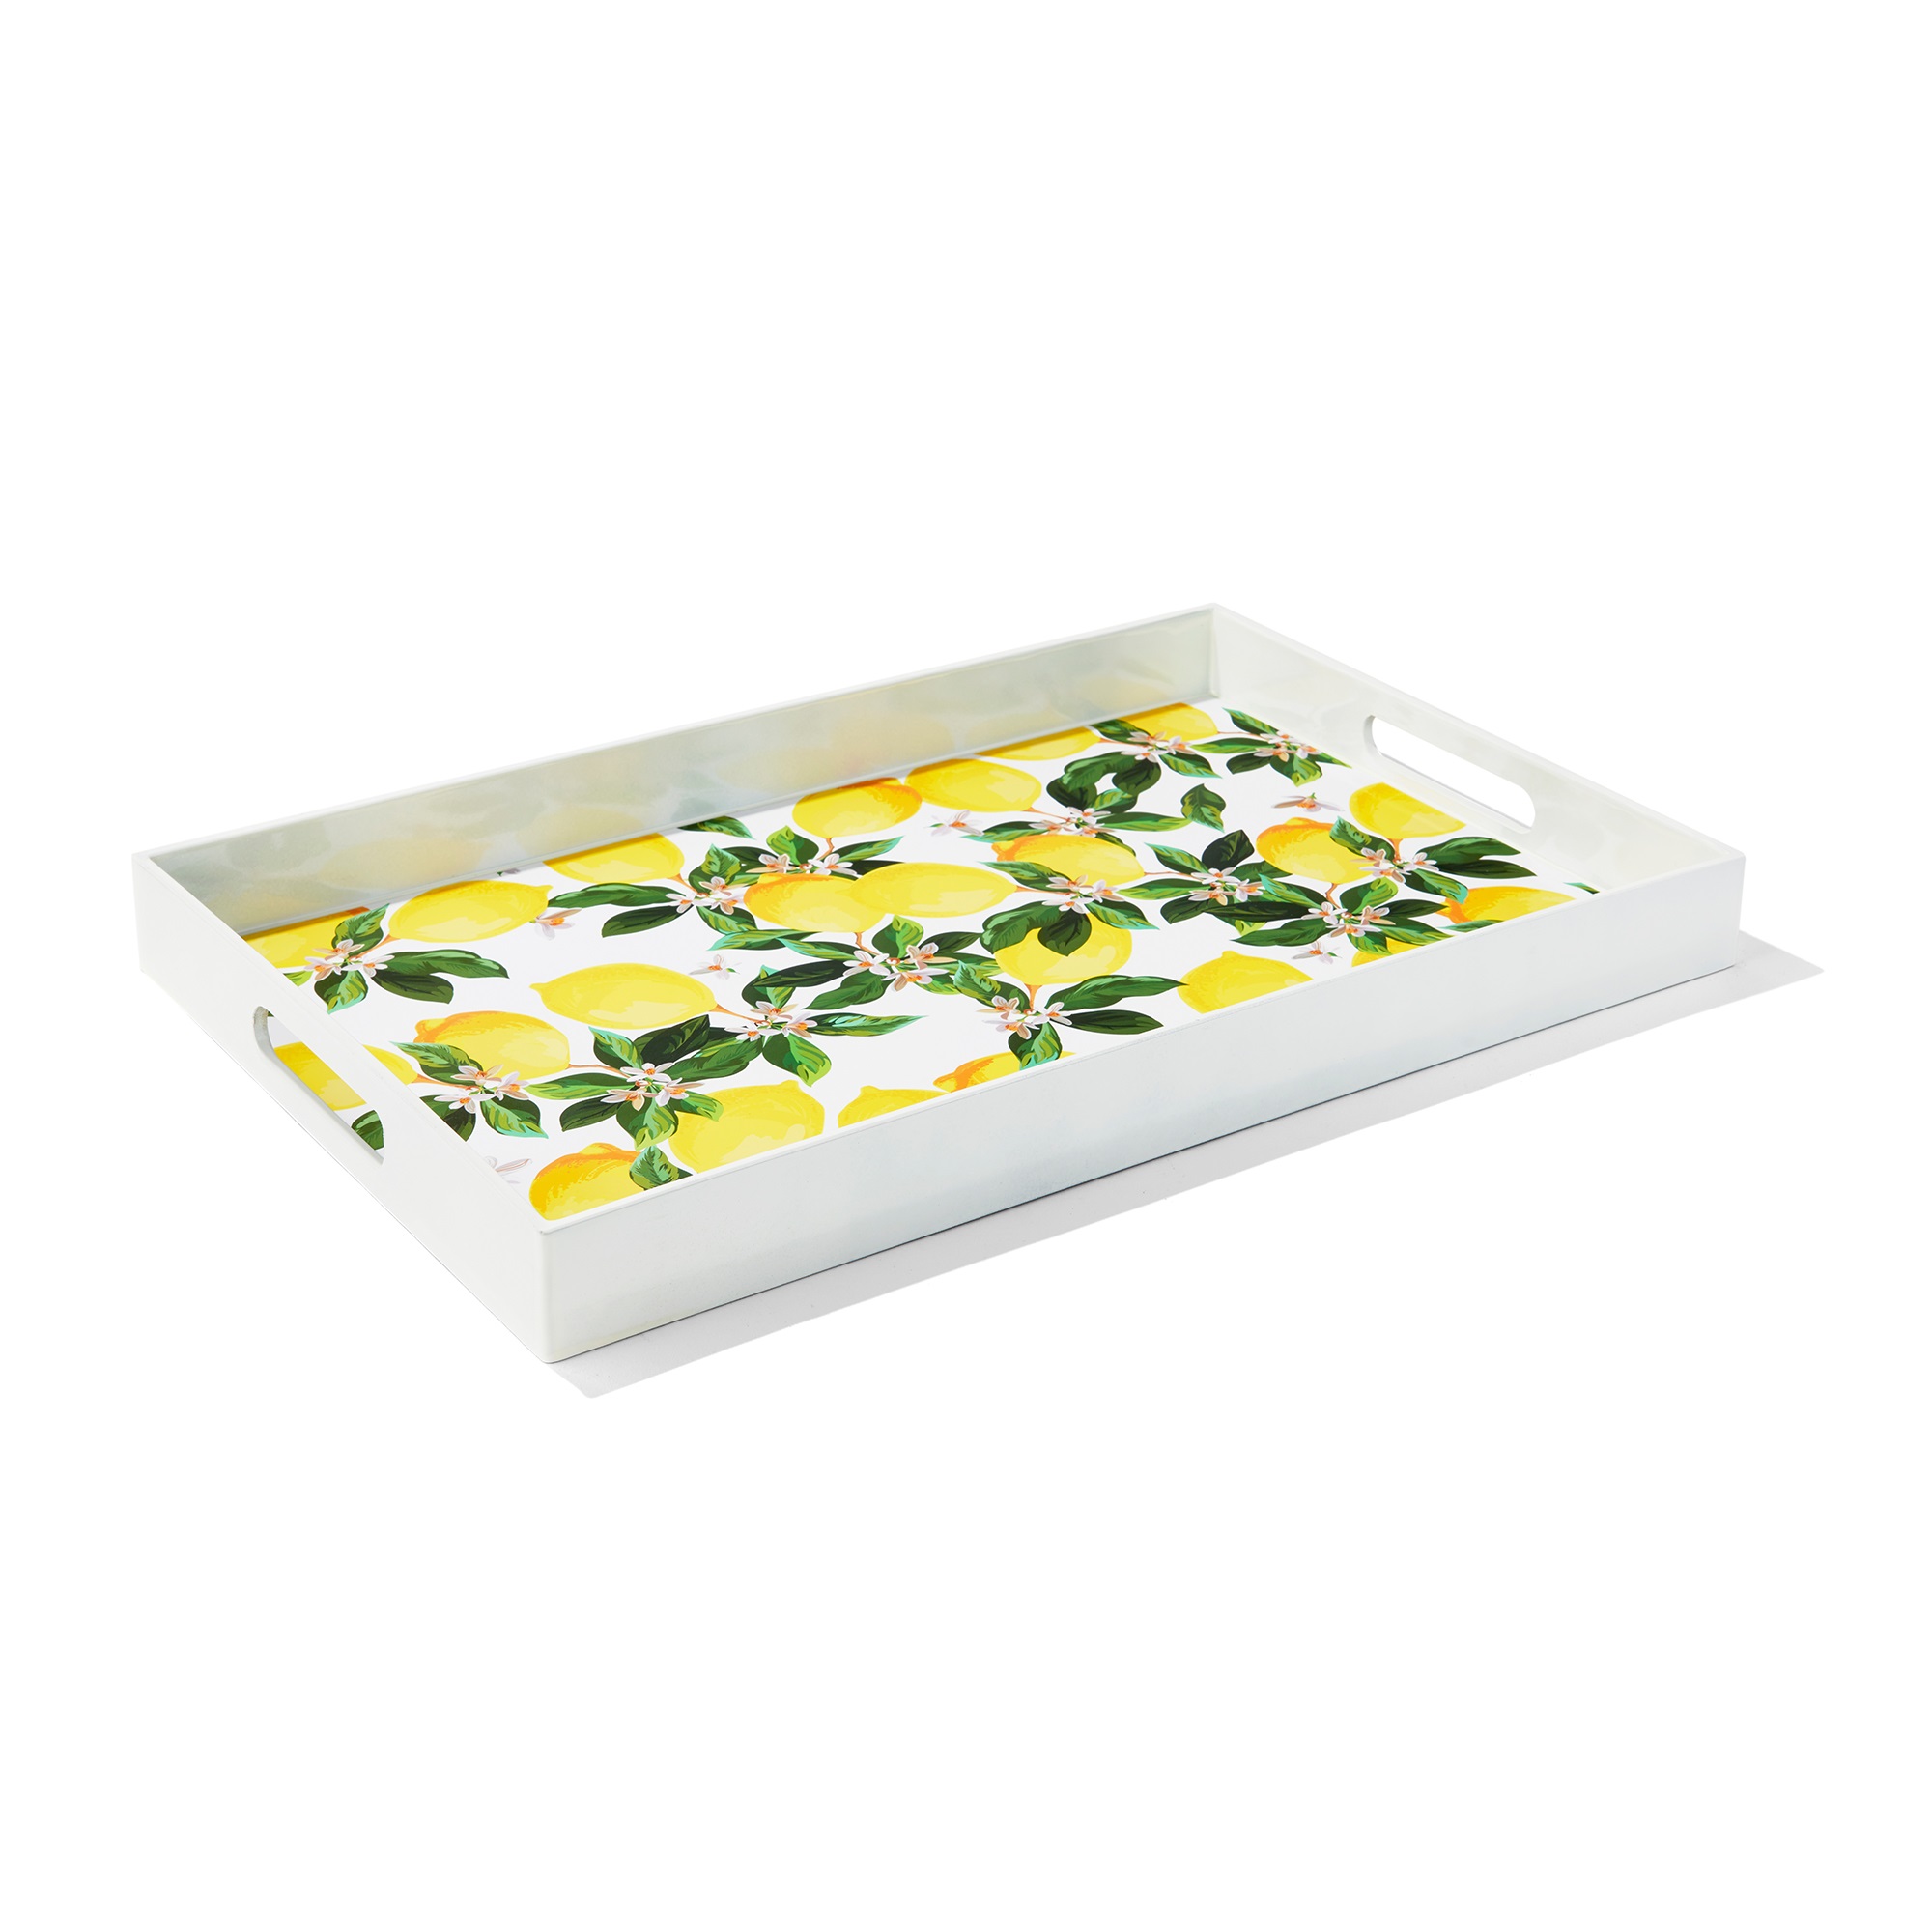 American Atelier Blossoms & Lemons Set of 2 Rectangular Serveware Trays w/ Handles, LG 14X19", MD 12 X 18"Trays